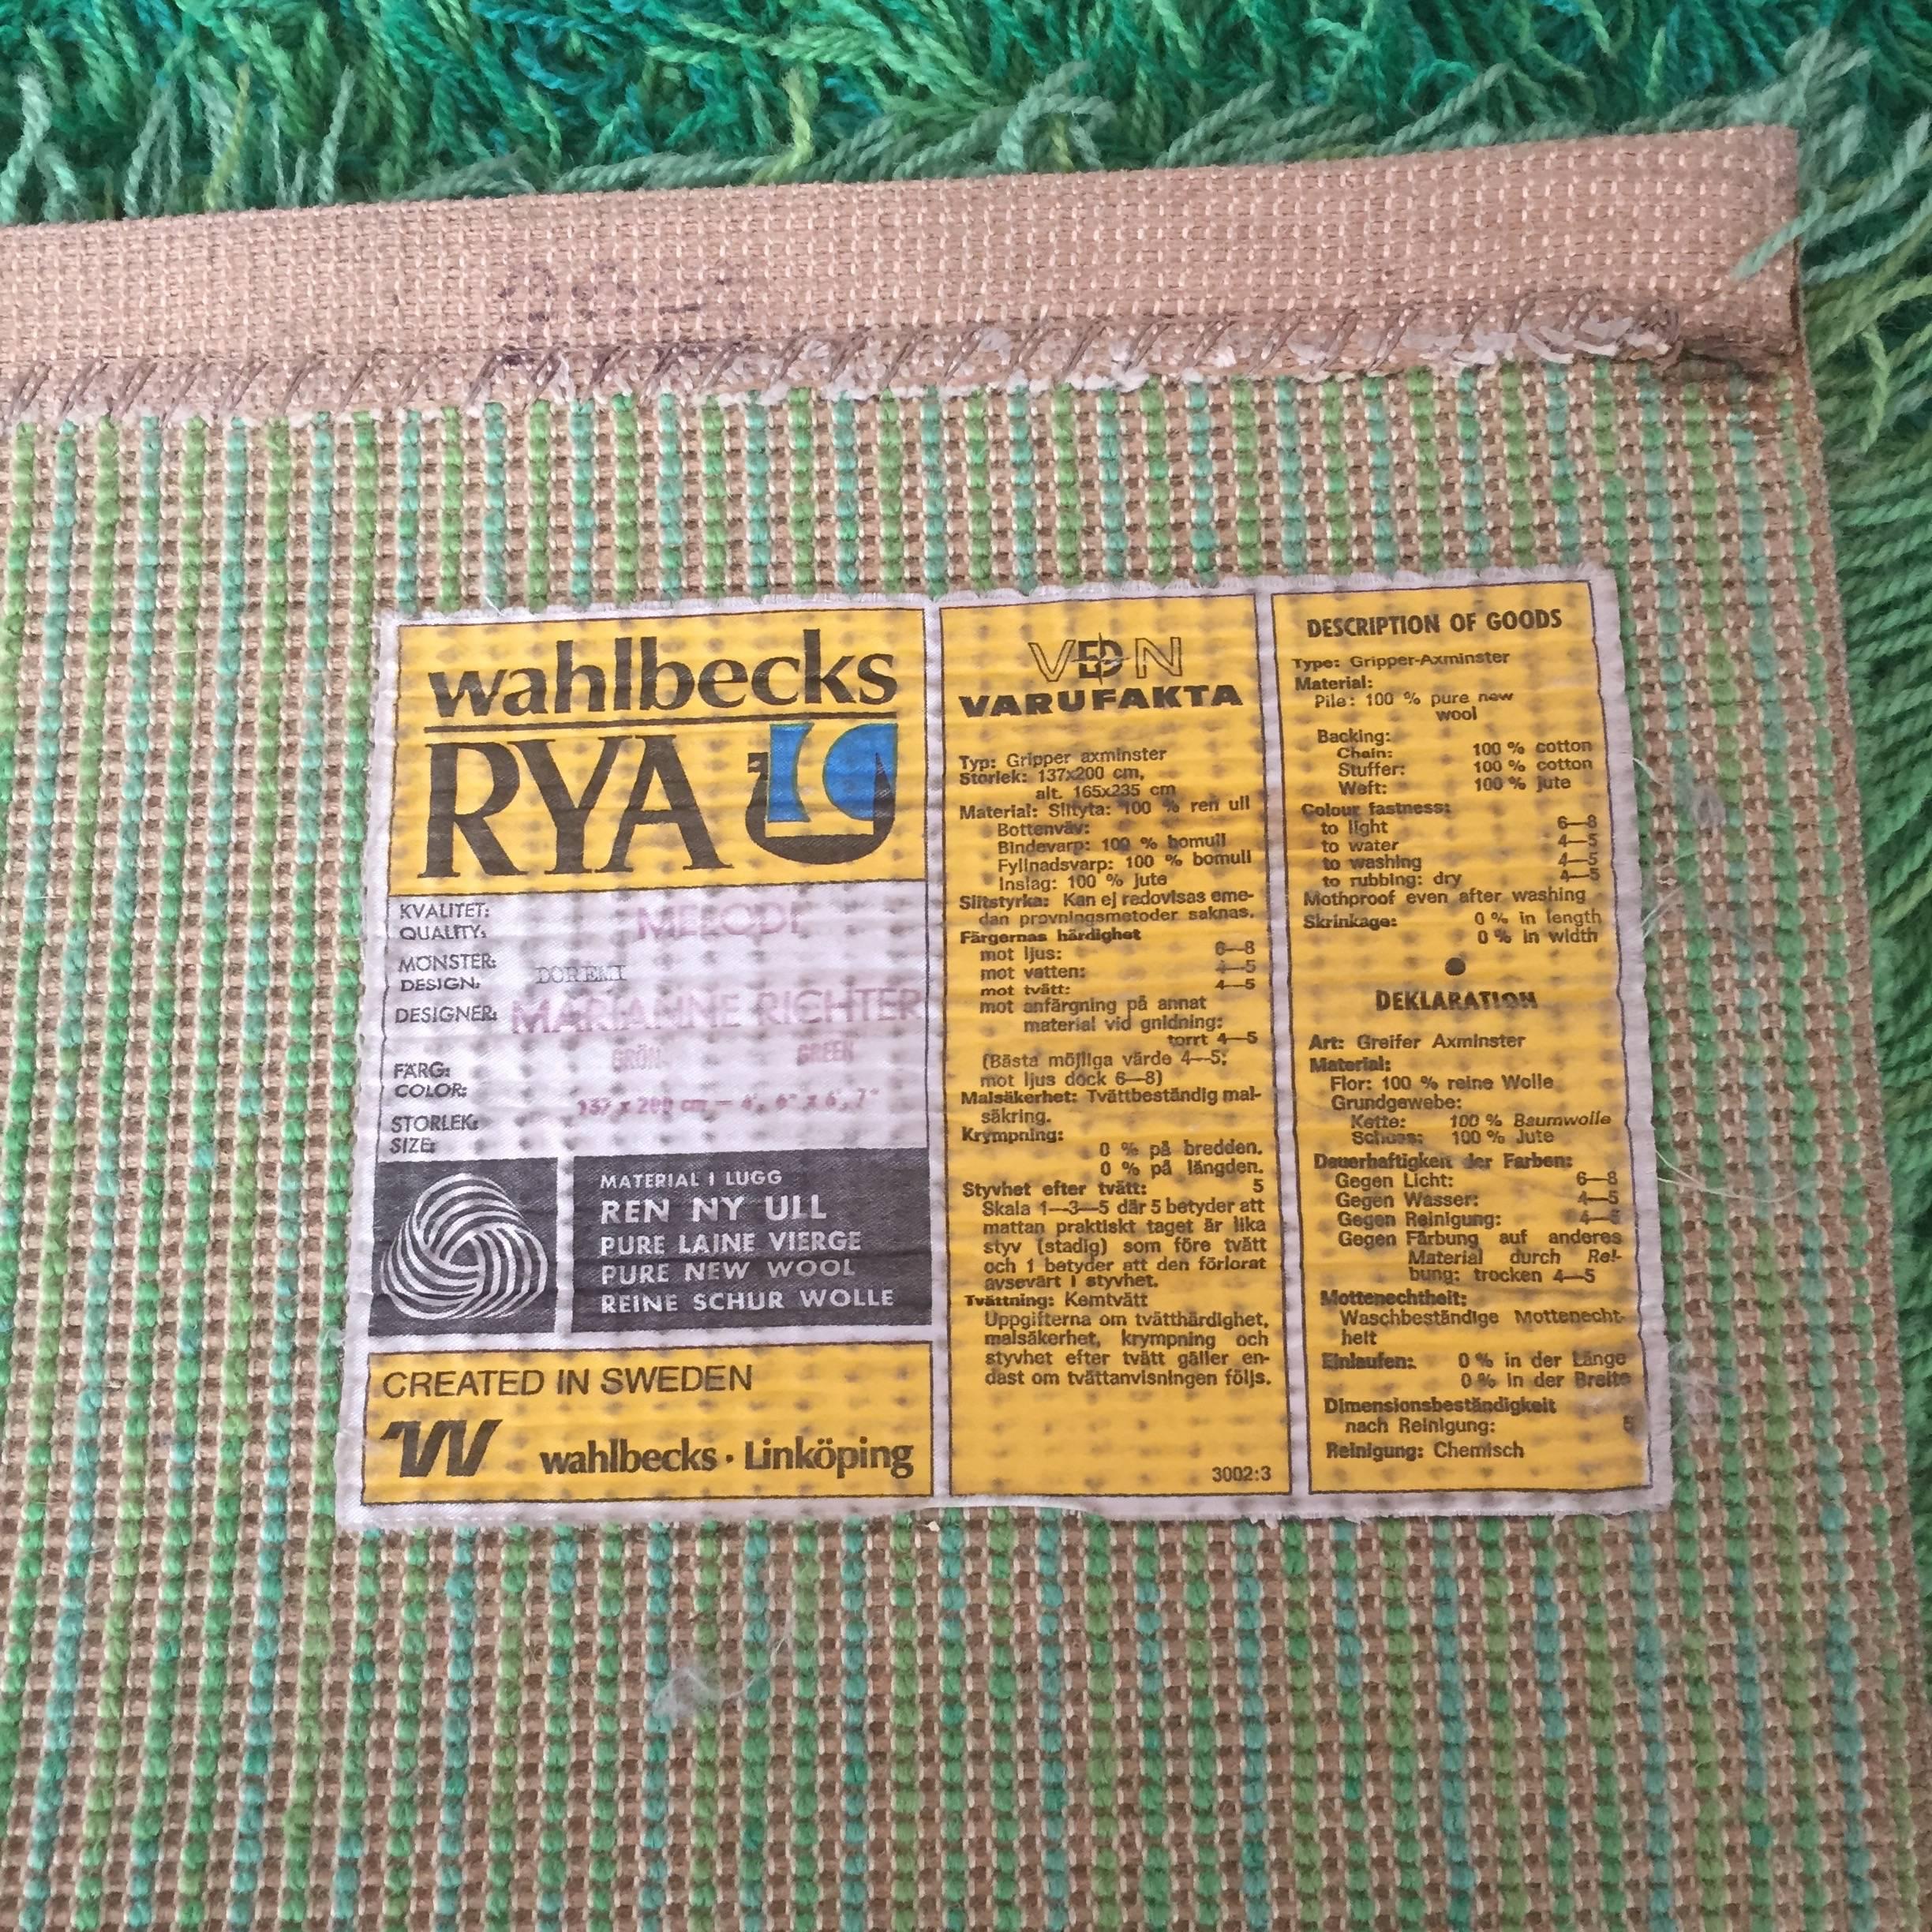 Wool Original 1960s Green Rya Rug by Marianne Richter for Wahlbecks Ab, Sweden